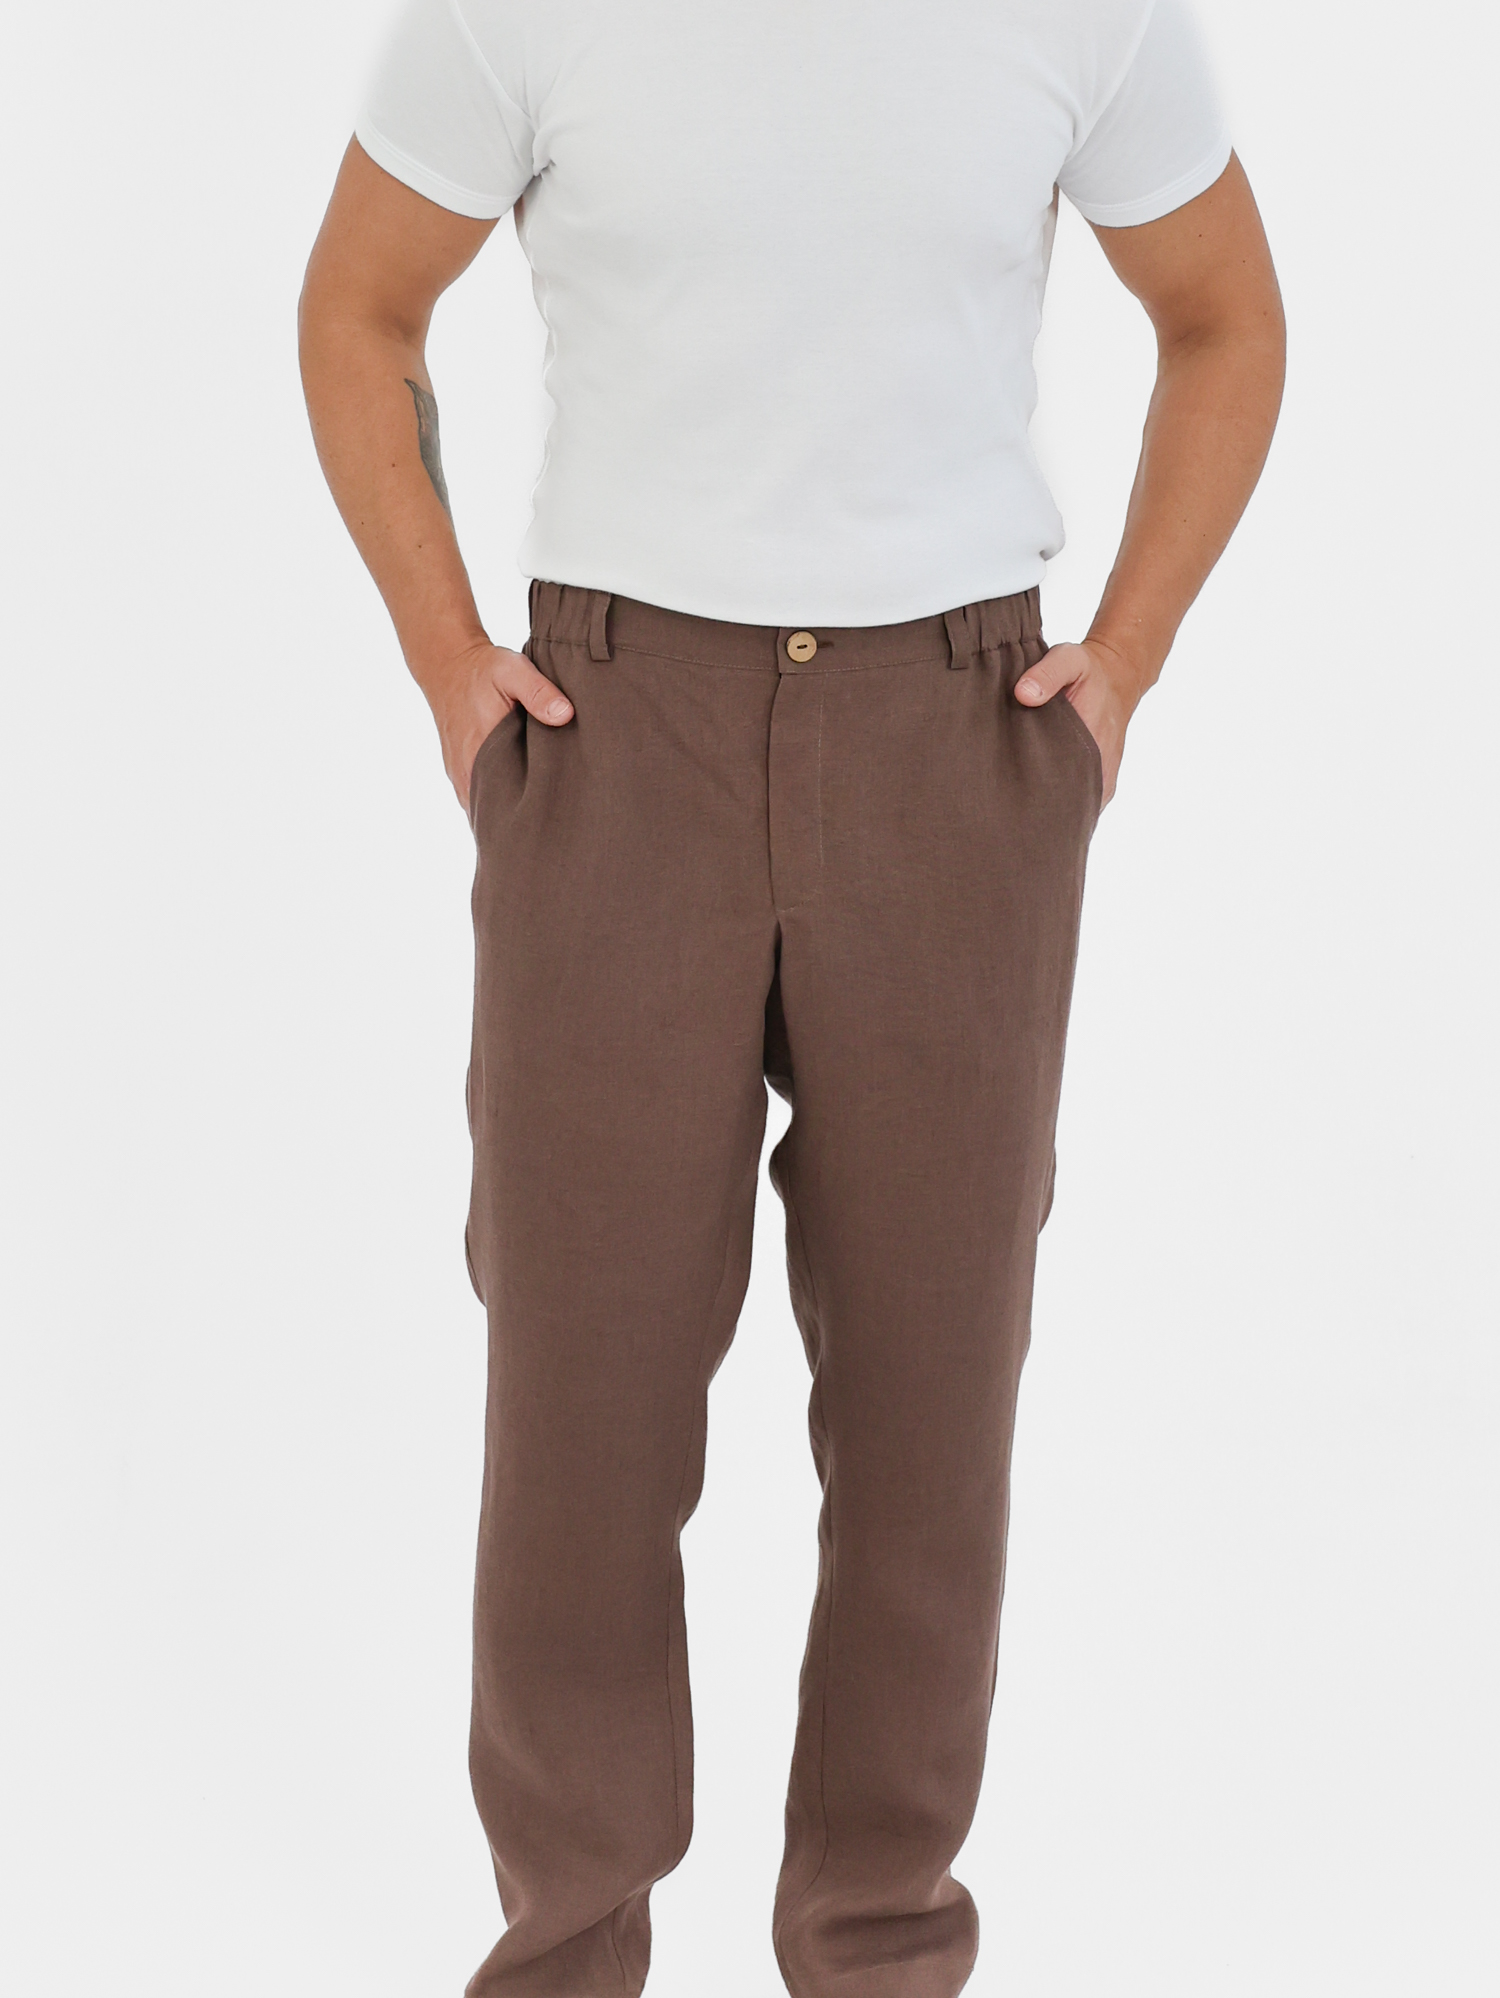 Men's brown linen trousers